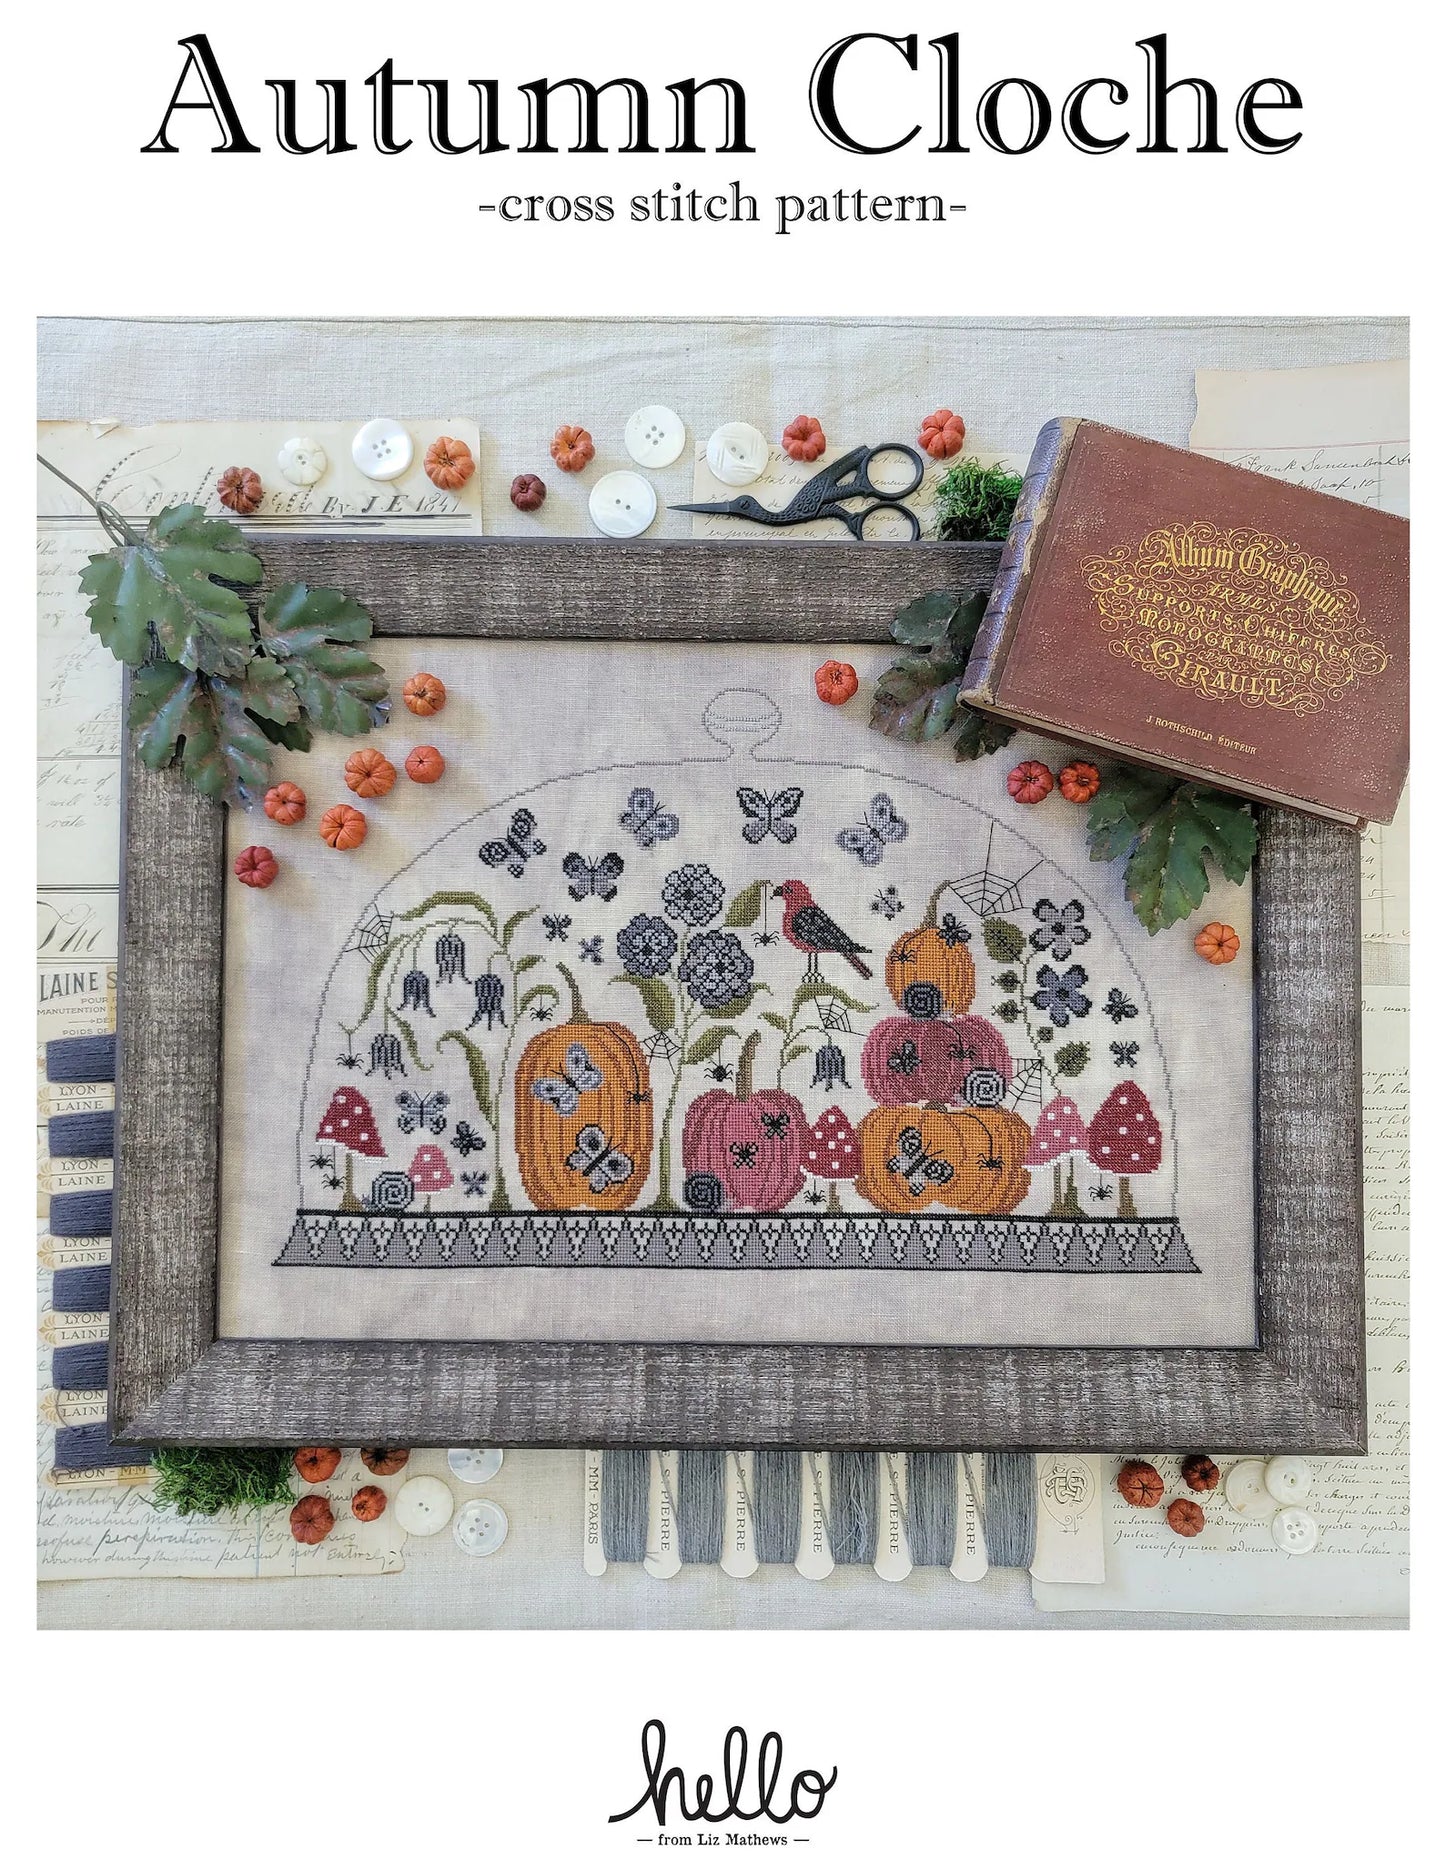 Autumn Cloche Cross Stitch Pattern Hello from Liz Mathews